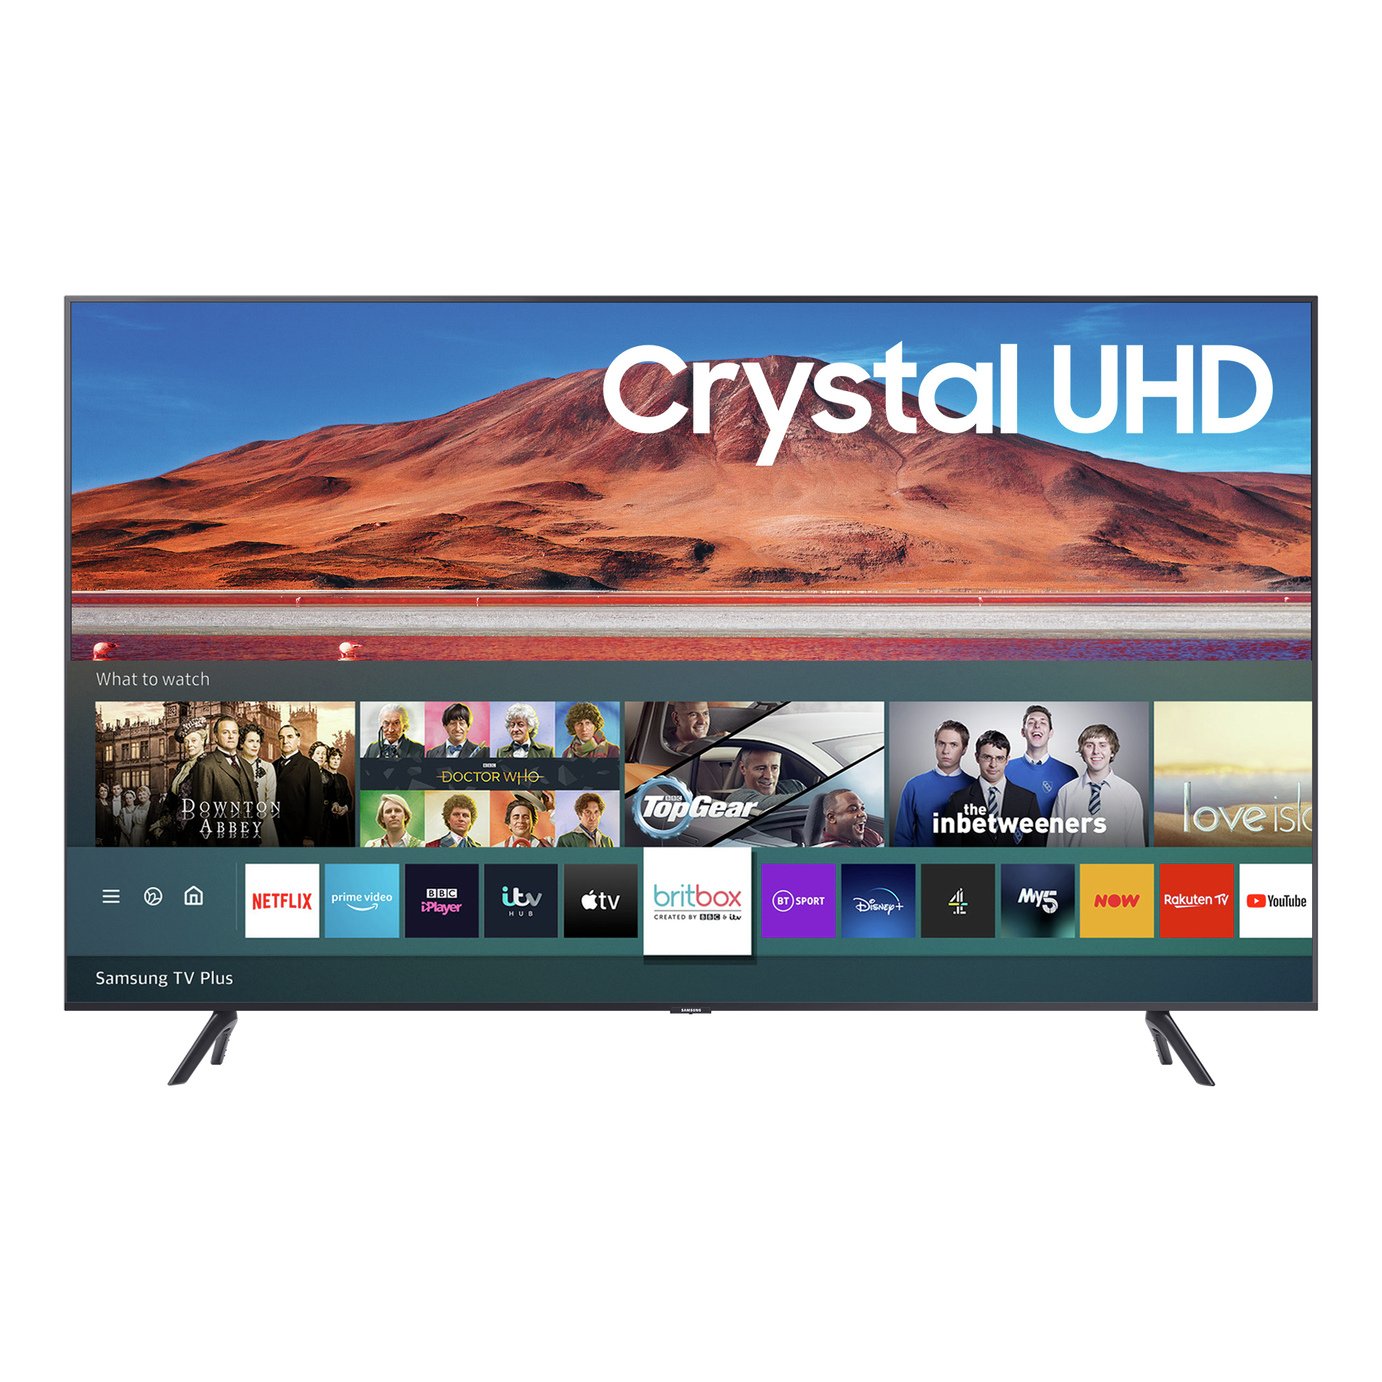 Samsung 55 Inch UE55TU7100 Smart Ultra HD TV Review